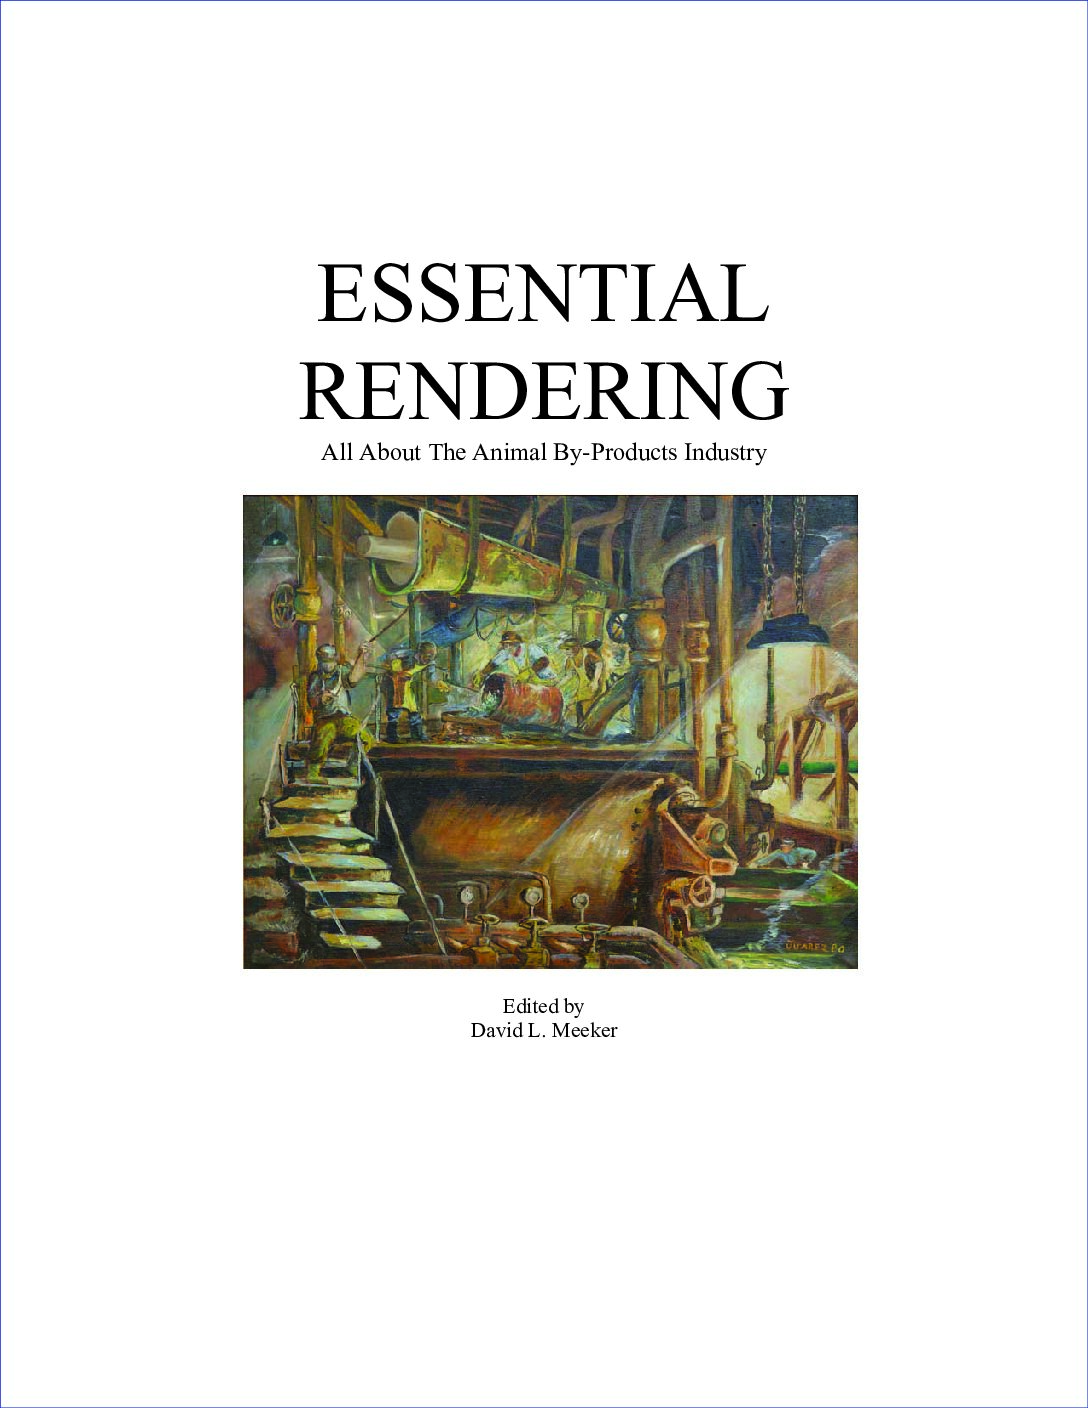 Essential Rendering Publication